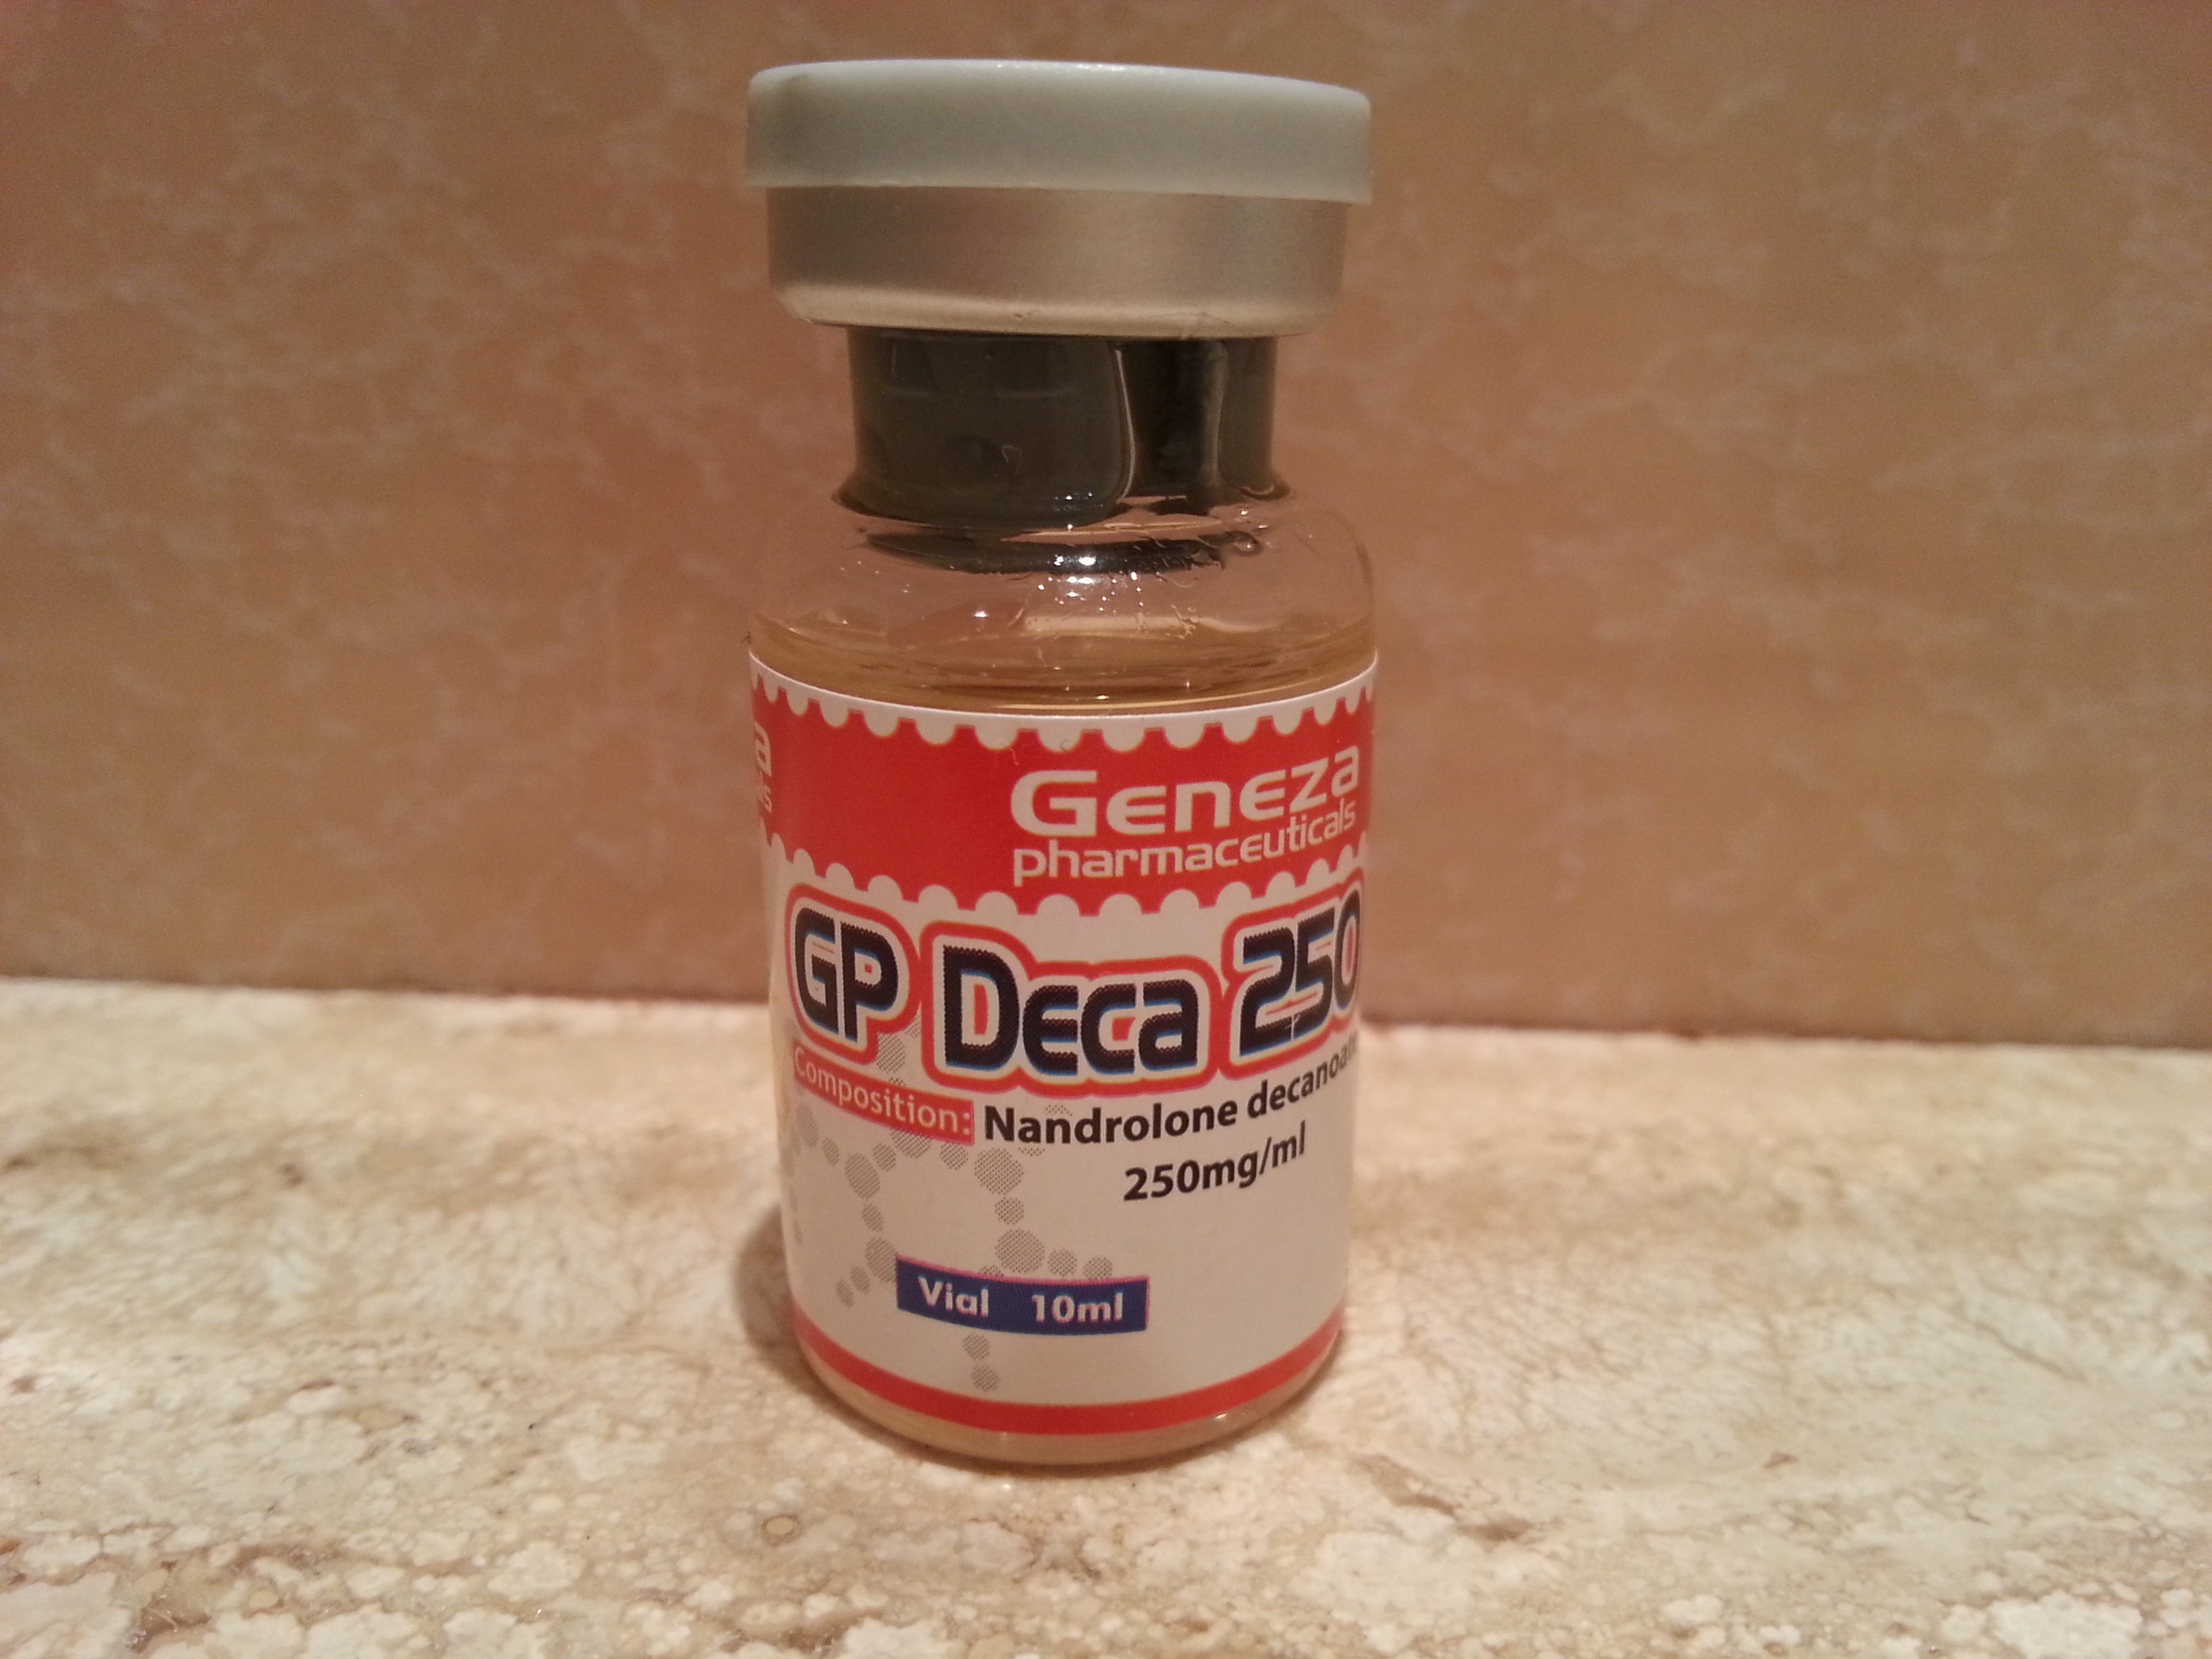 Geneza Pharmaceuticals GP Deca 250 Lab Test Results - Anabolic Lab